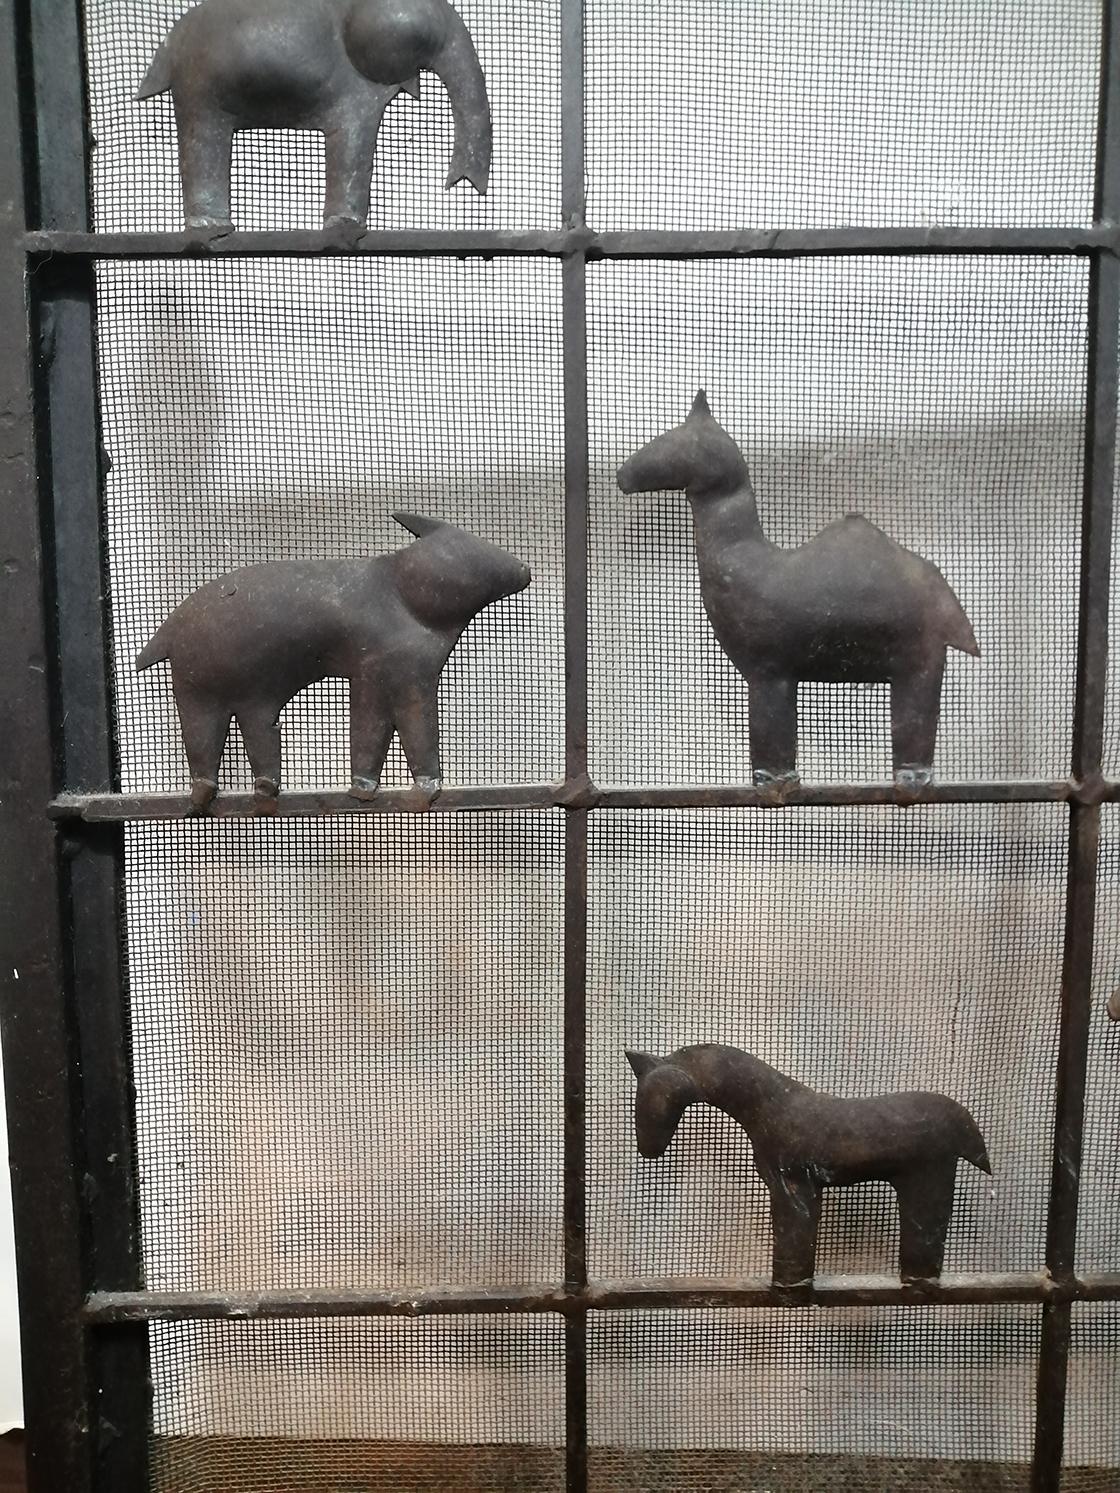 cast iron farm animals